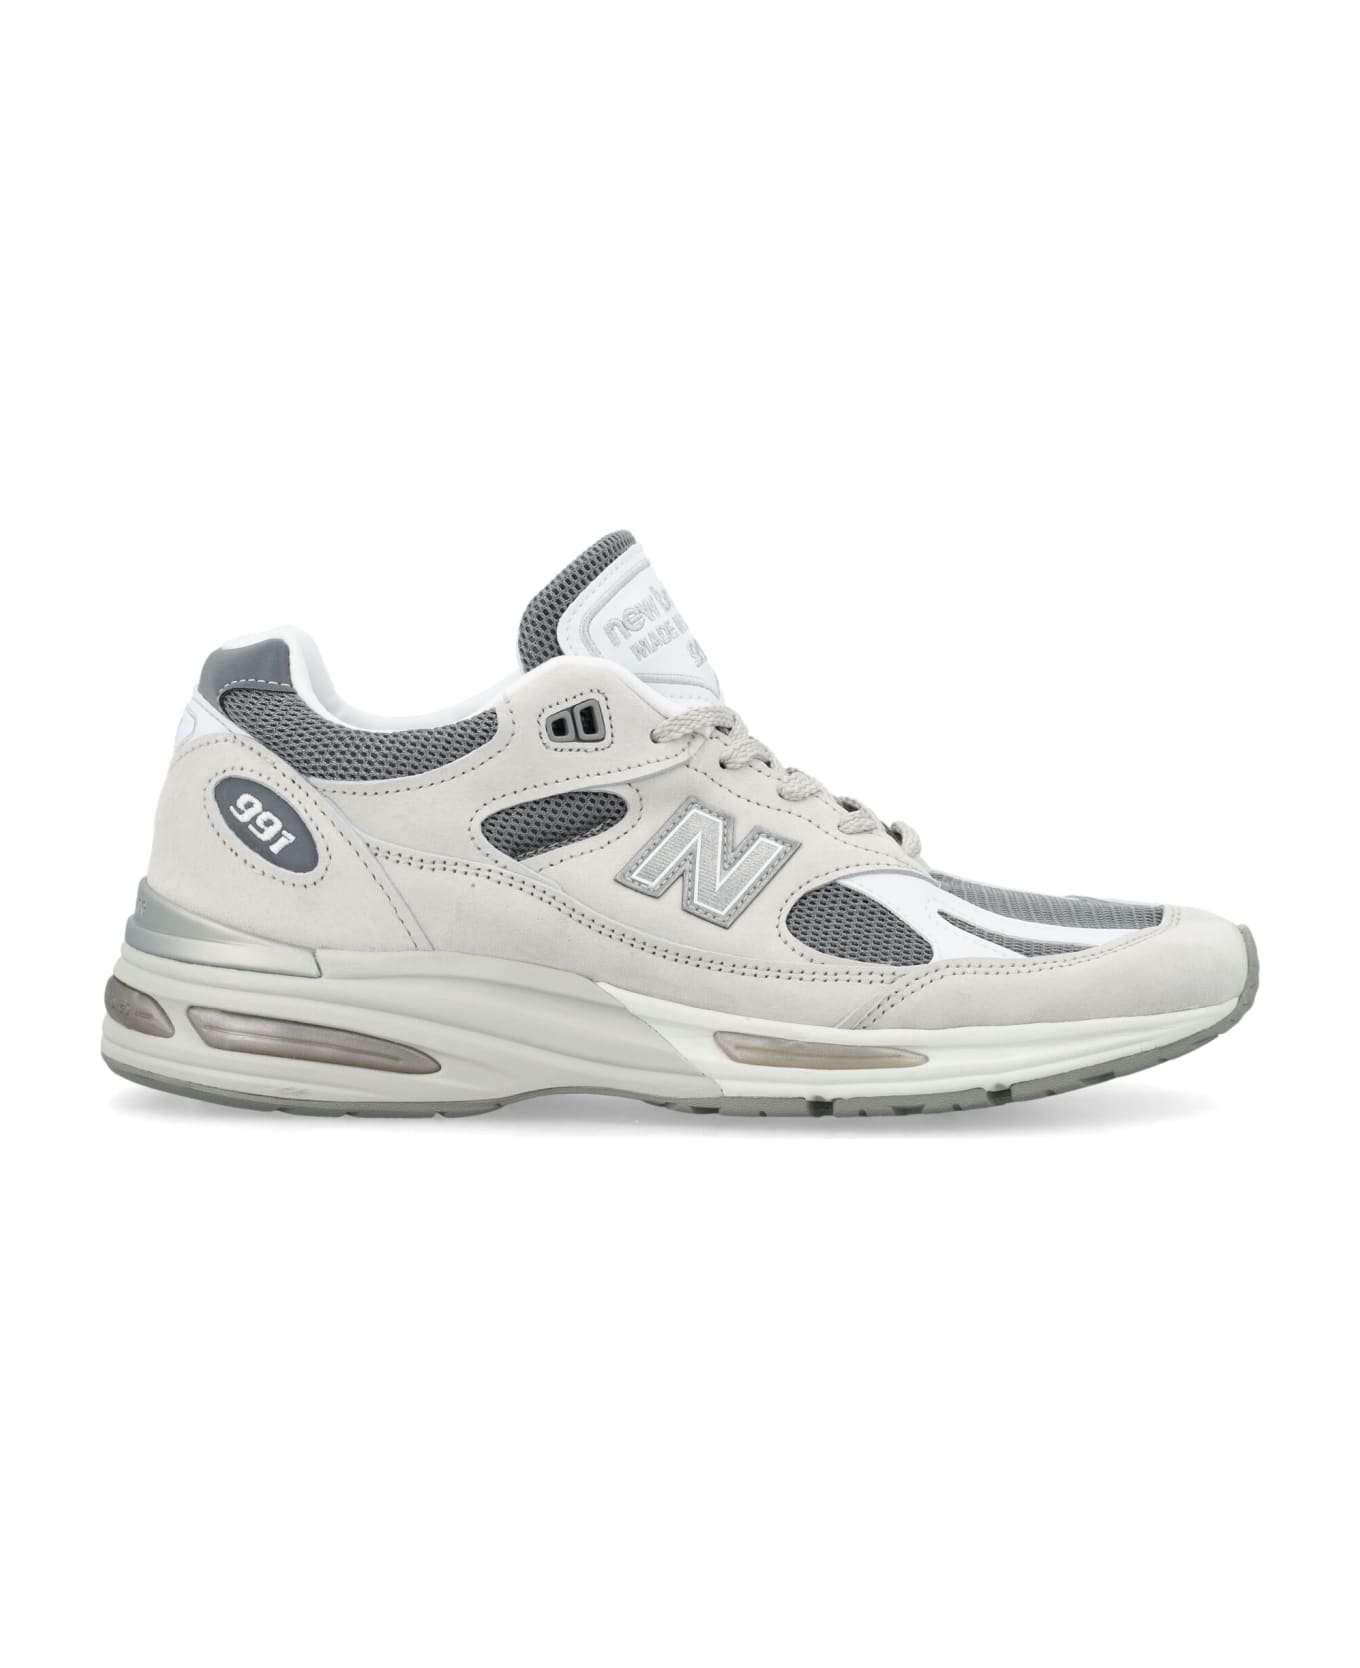 New Balance Nb 991 Sneakers - GREY